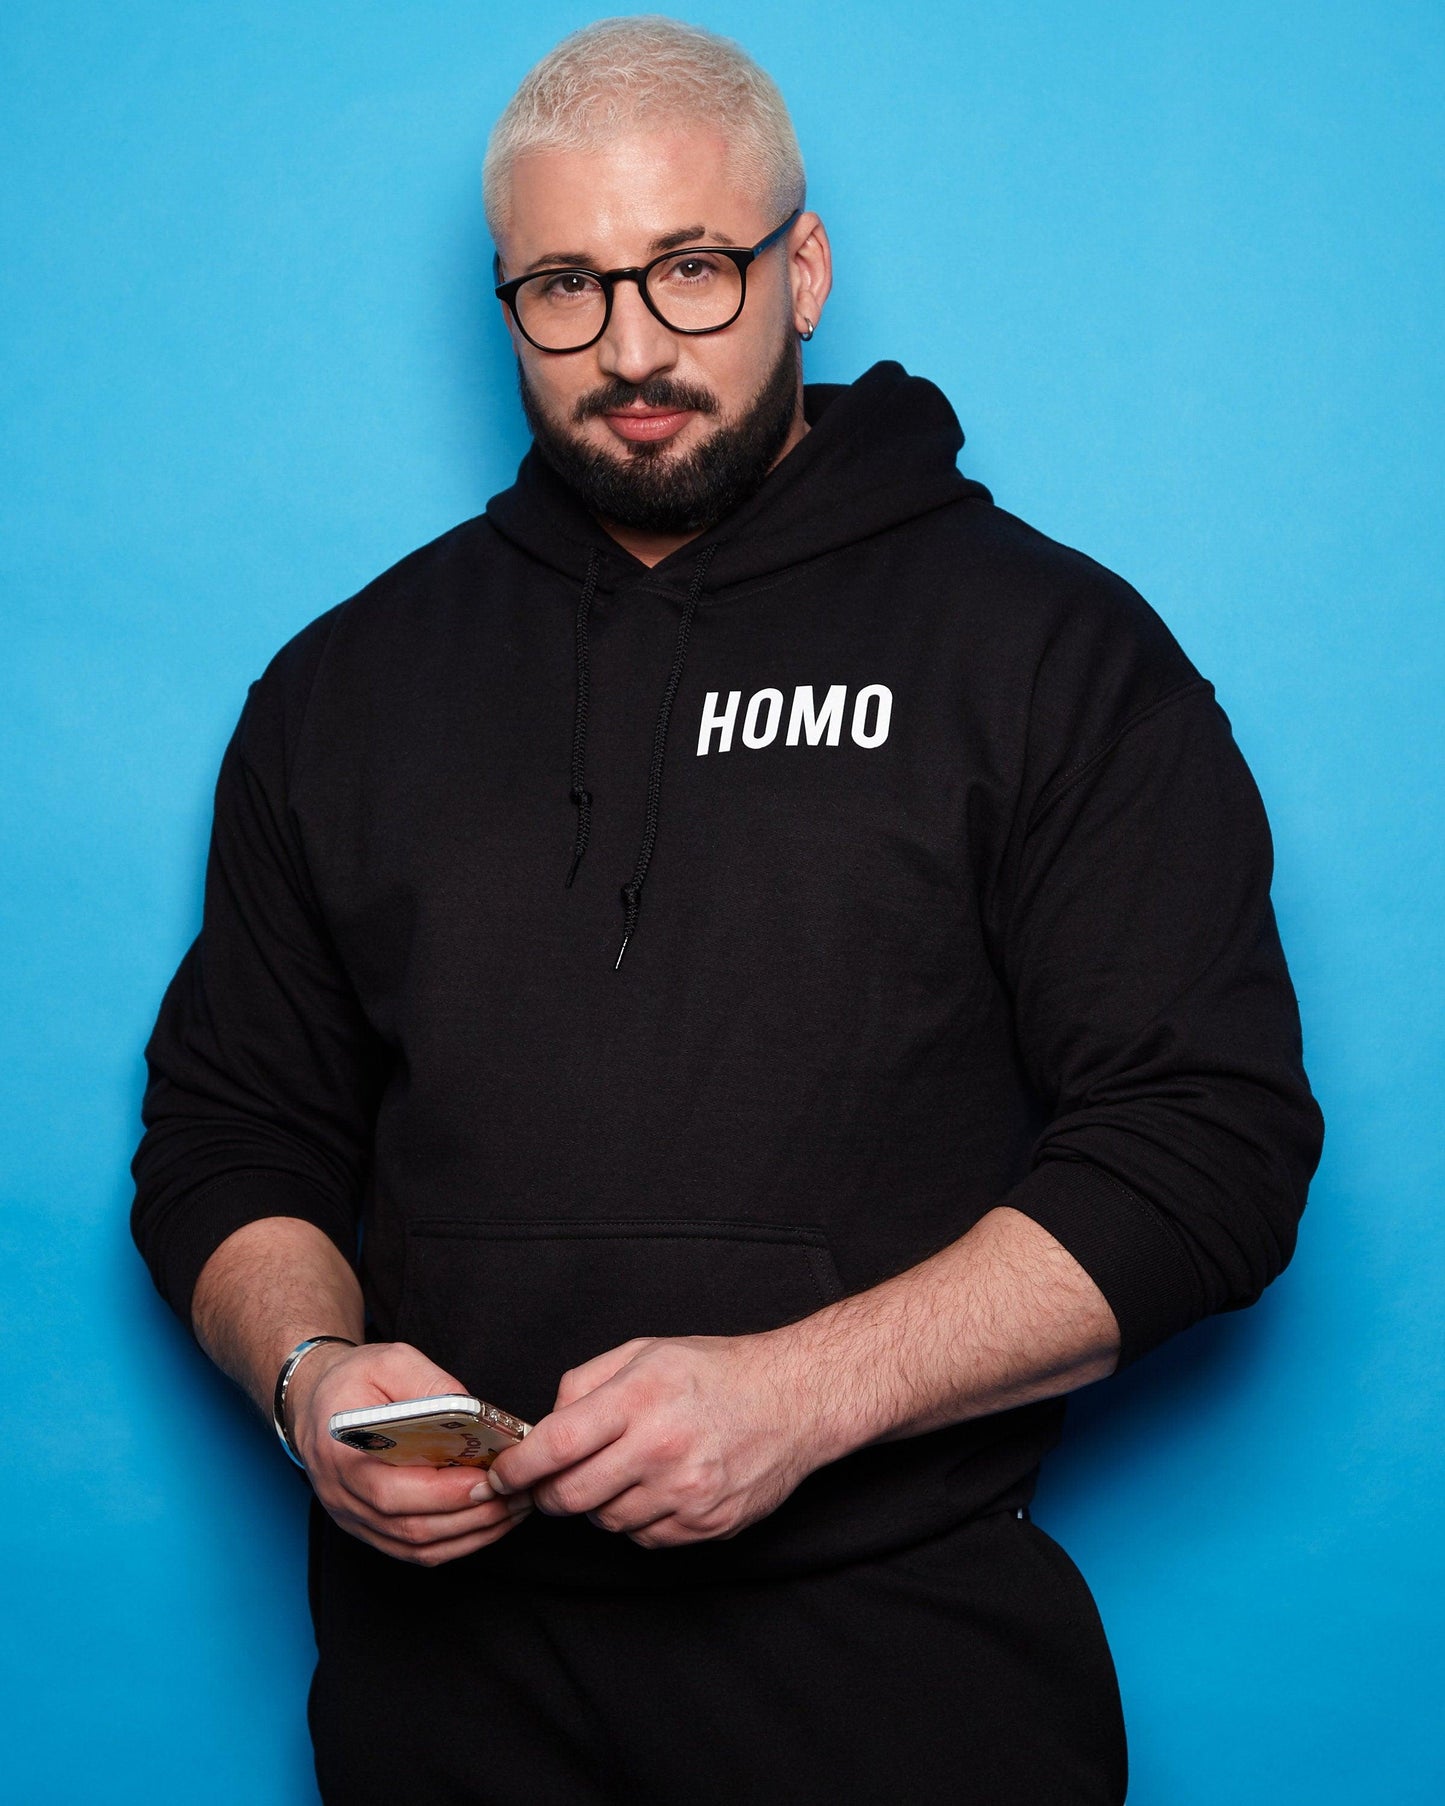 HOMO logo hoodie - White on Black